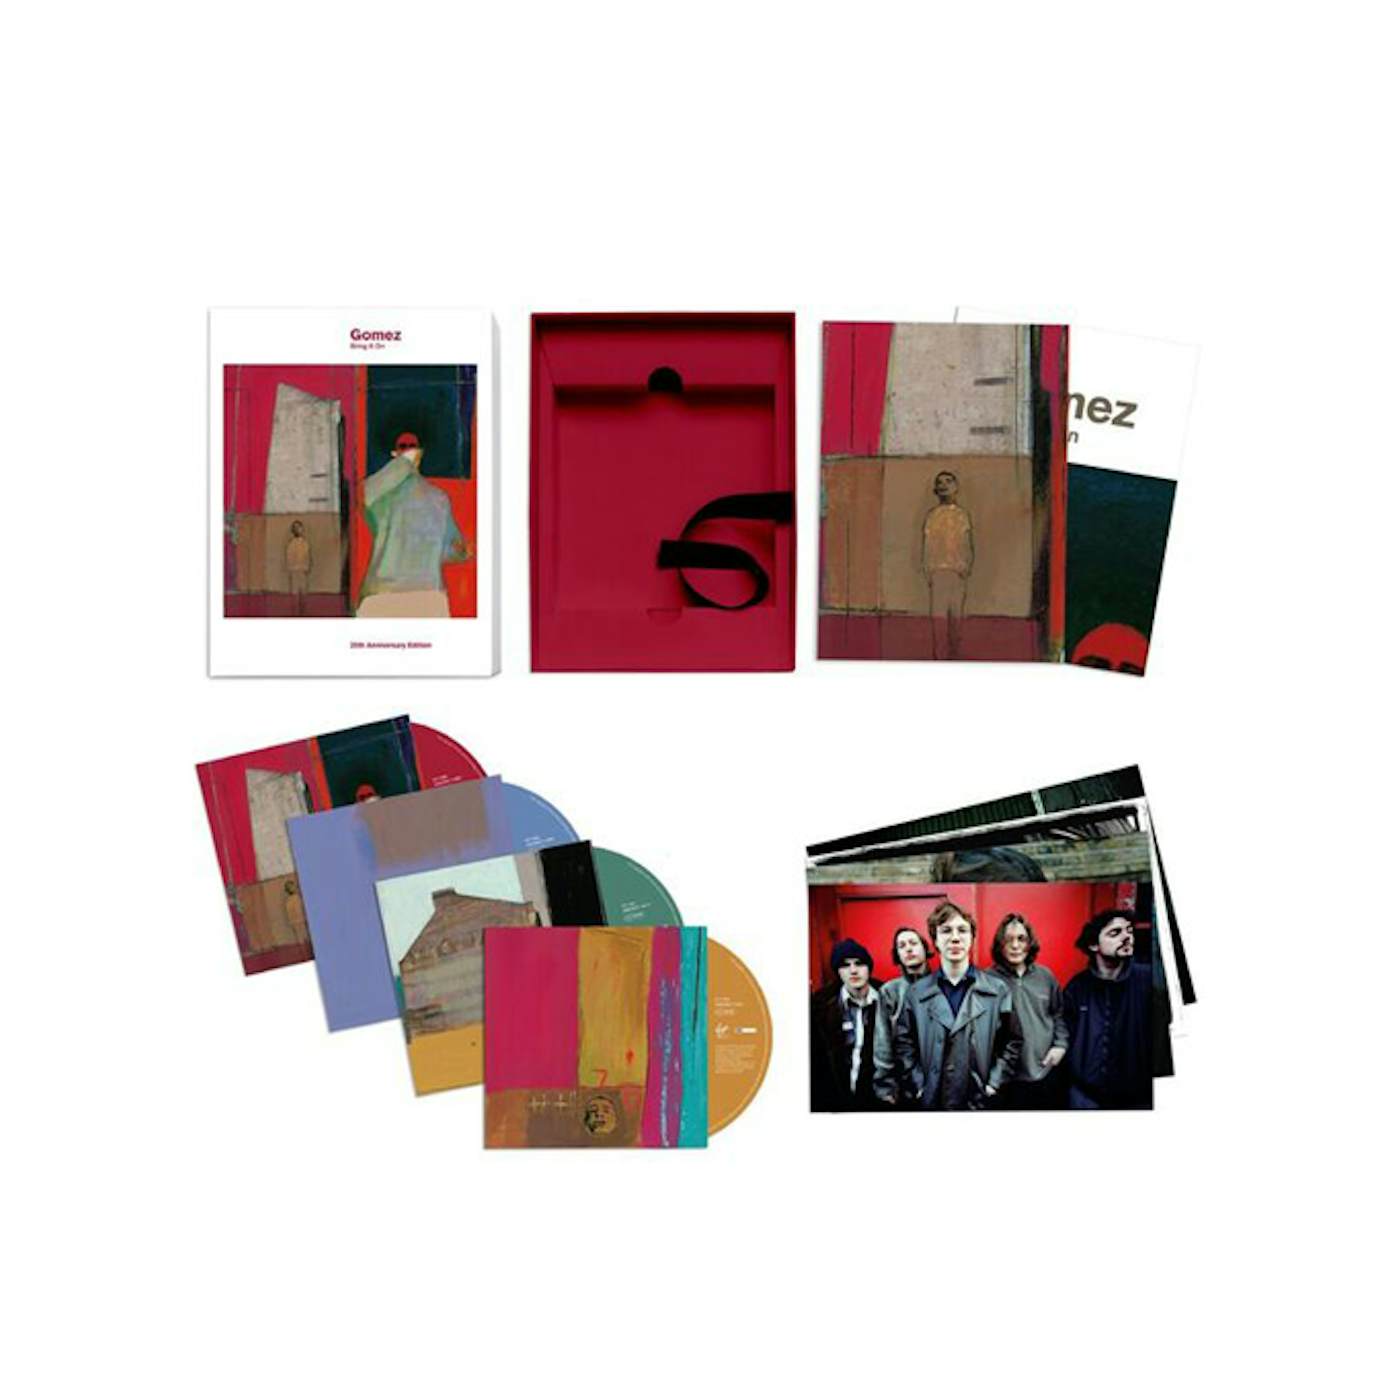 Gomez "Bring it On-20th Anniversary-Super Deluxe Edition" 4-CD Box Set